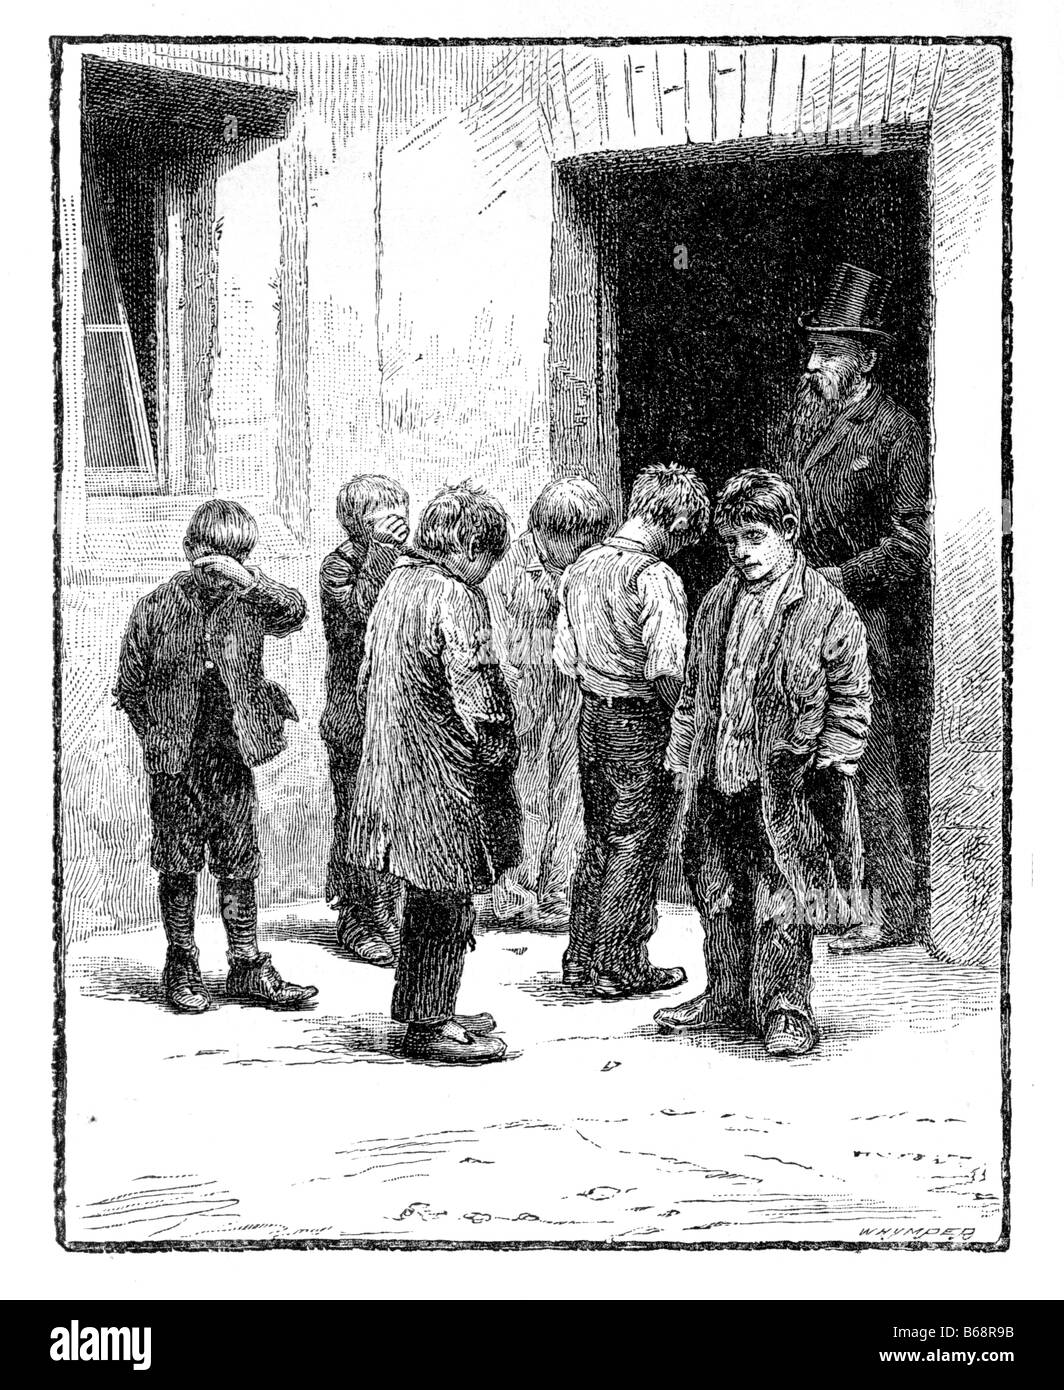 Truant School Children circa 1890 Engraving by Edward Whymper b1840 d1911 Stock Photo